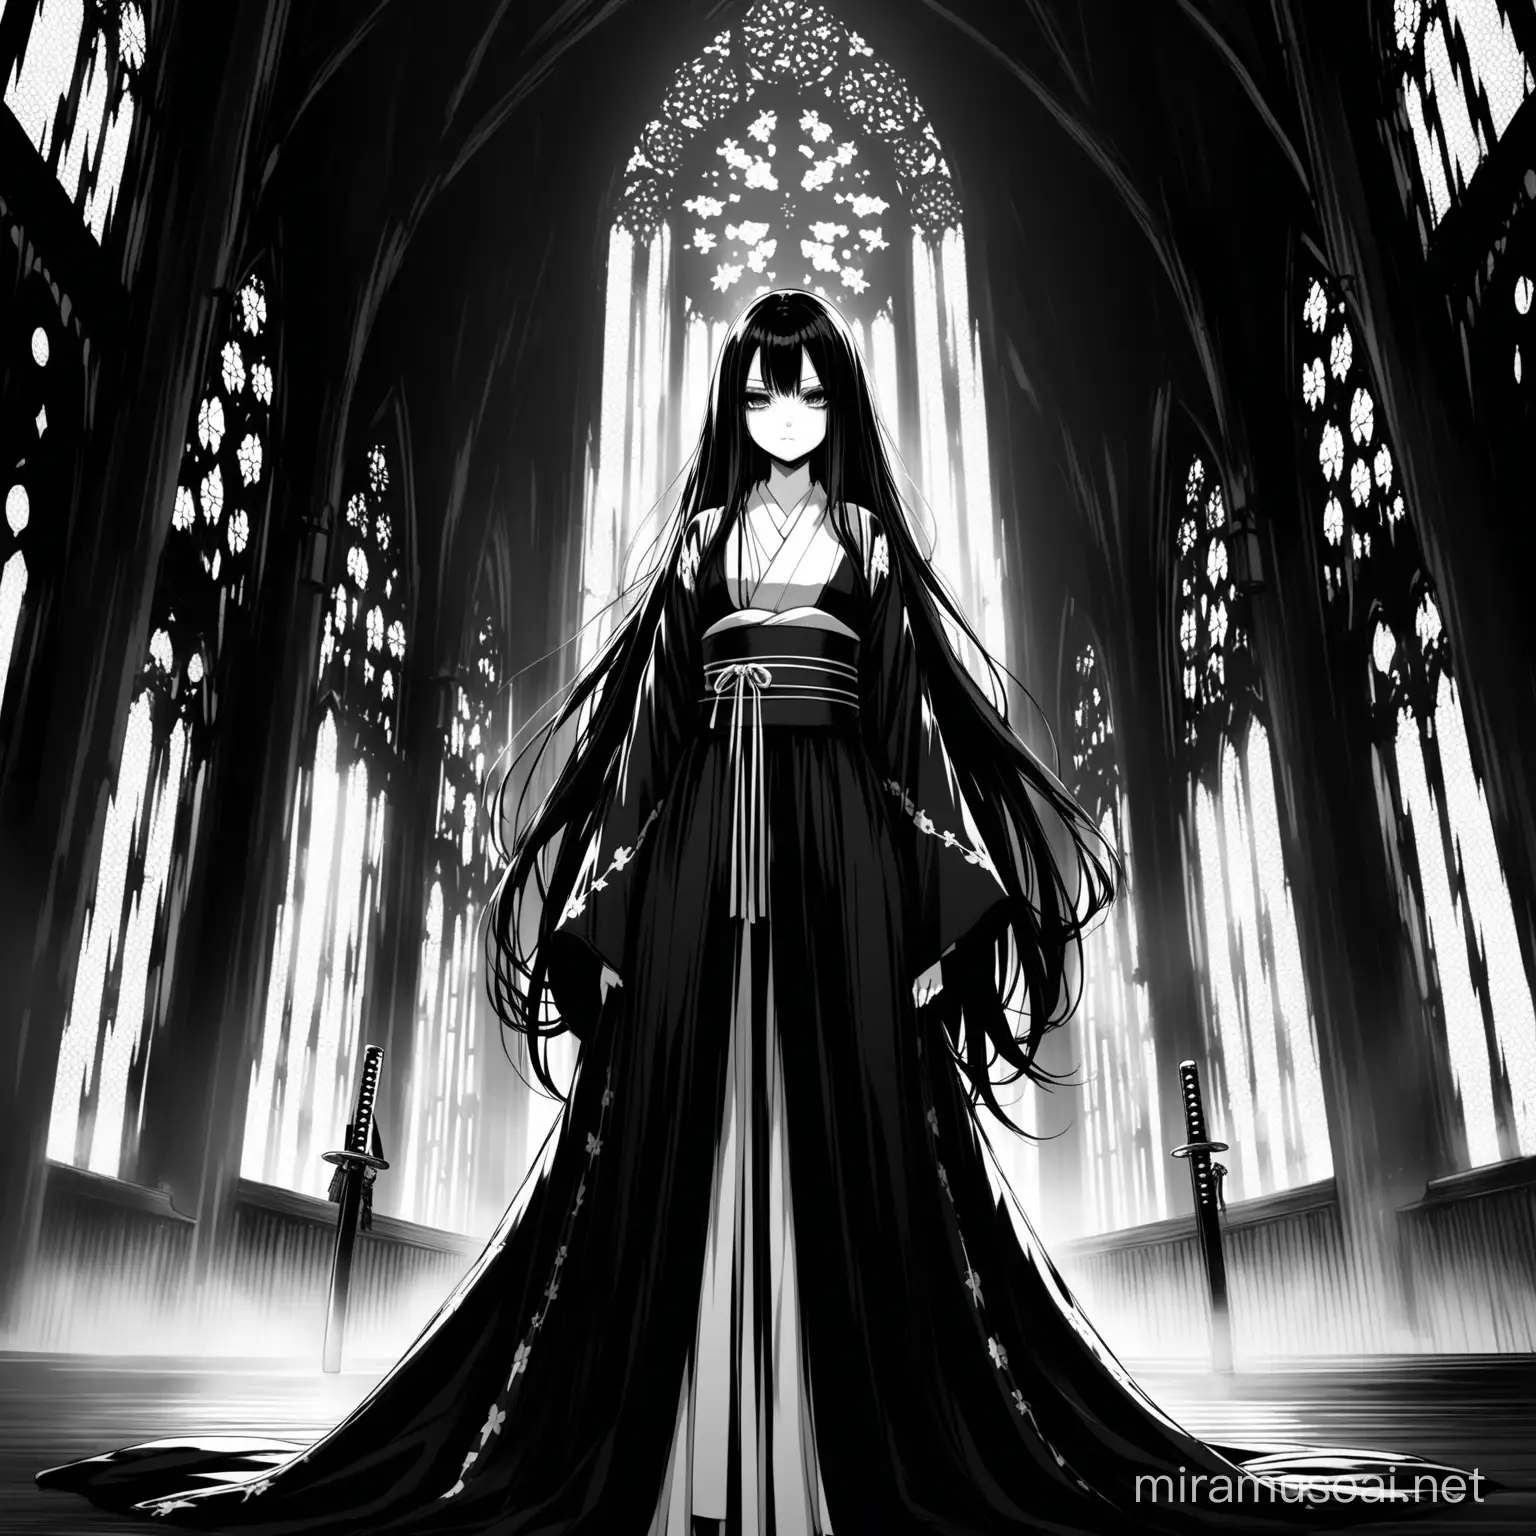 Mysterious Anime Girl with Katana in Gothic Church